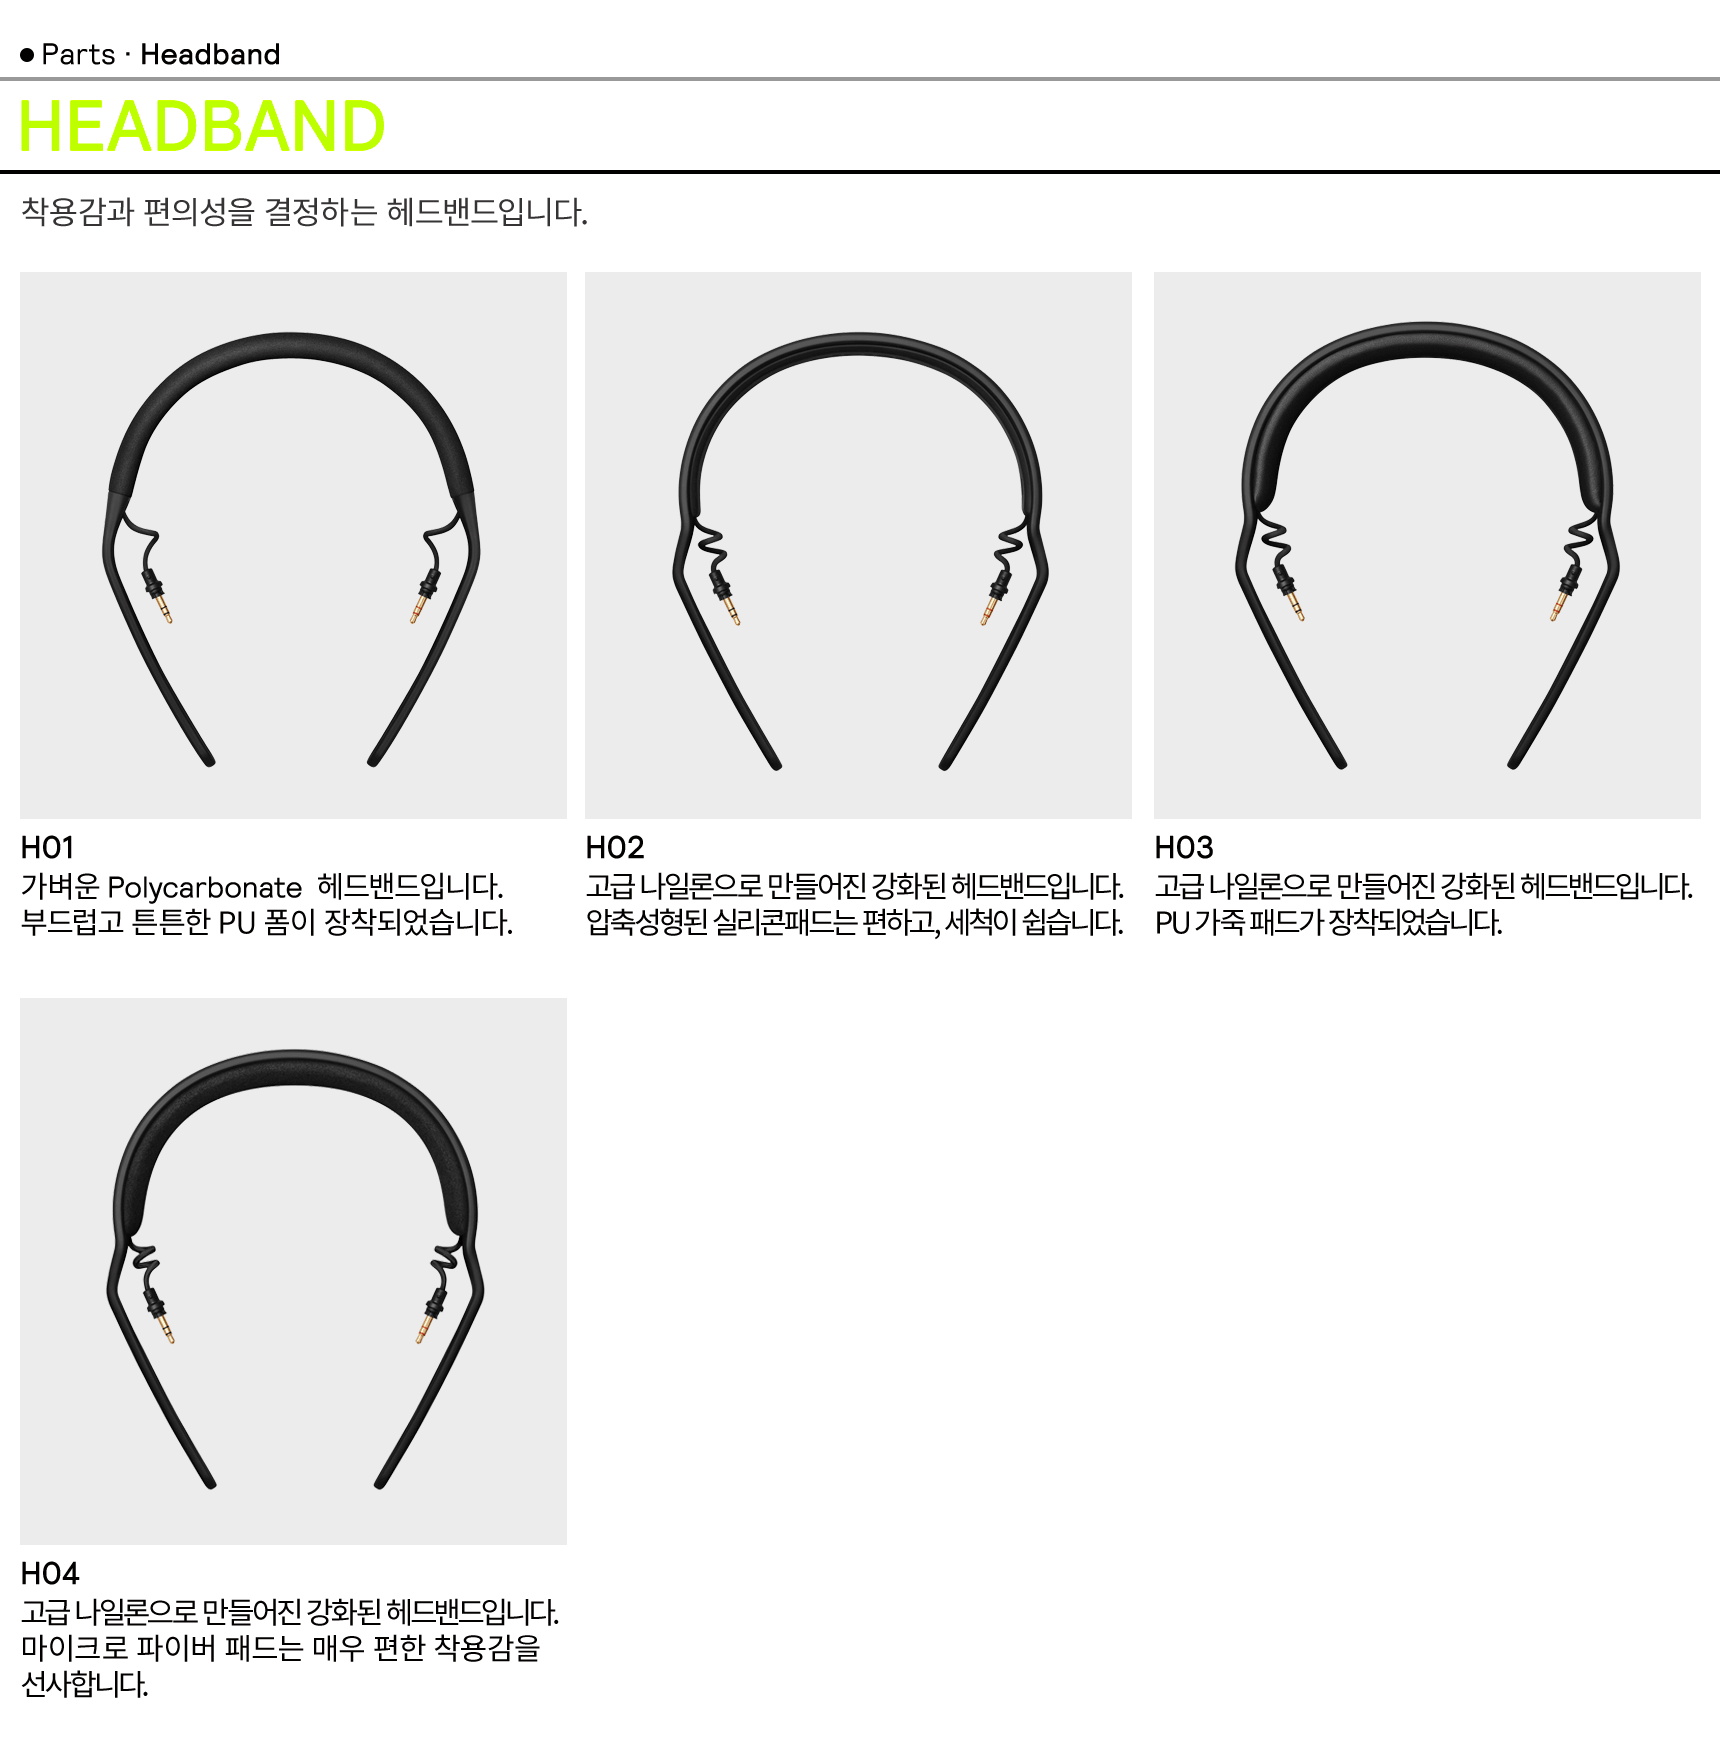 module_3_headband_124322.png